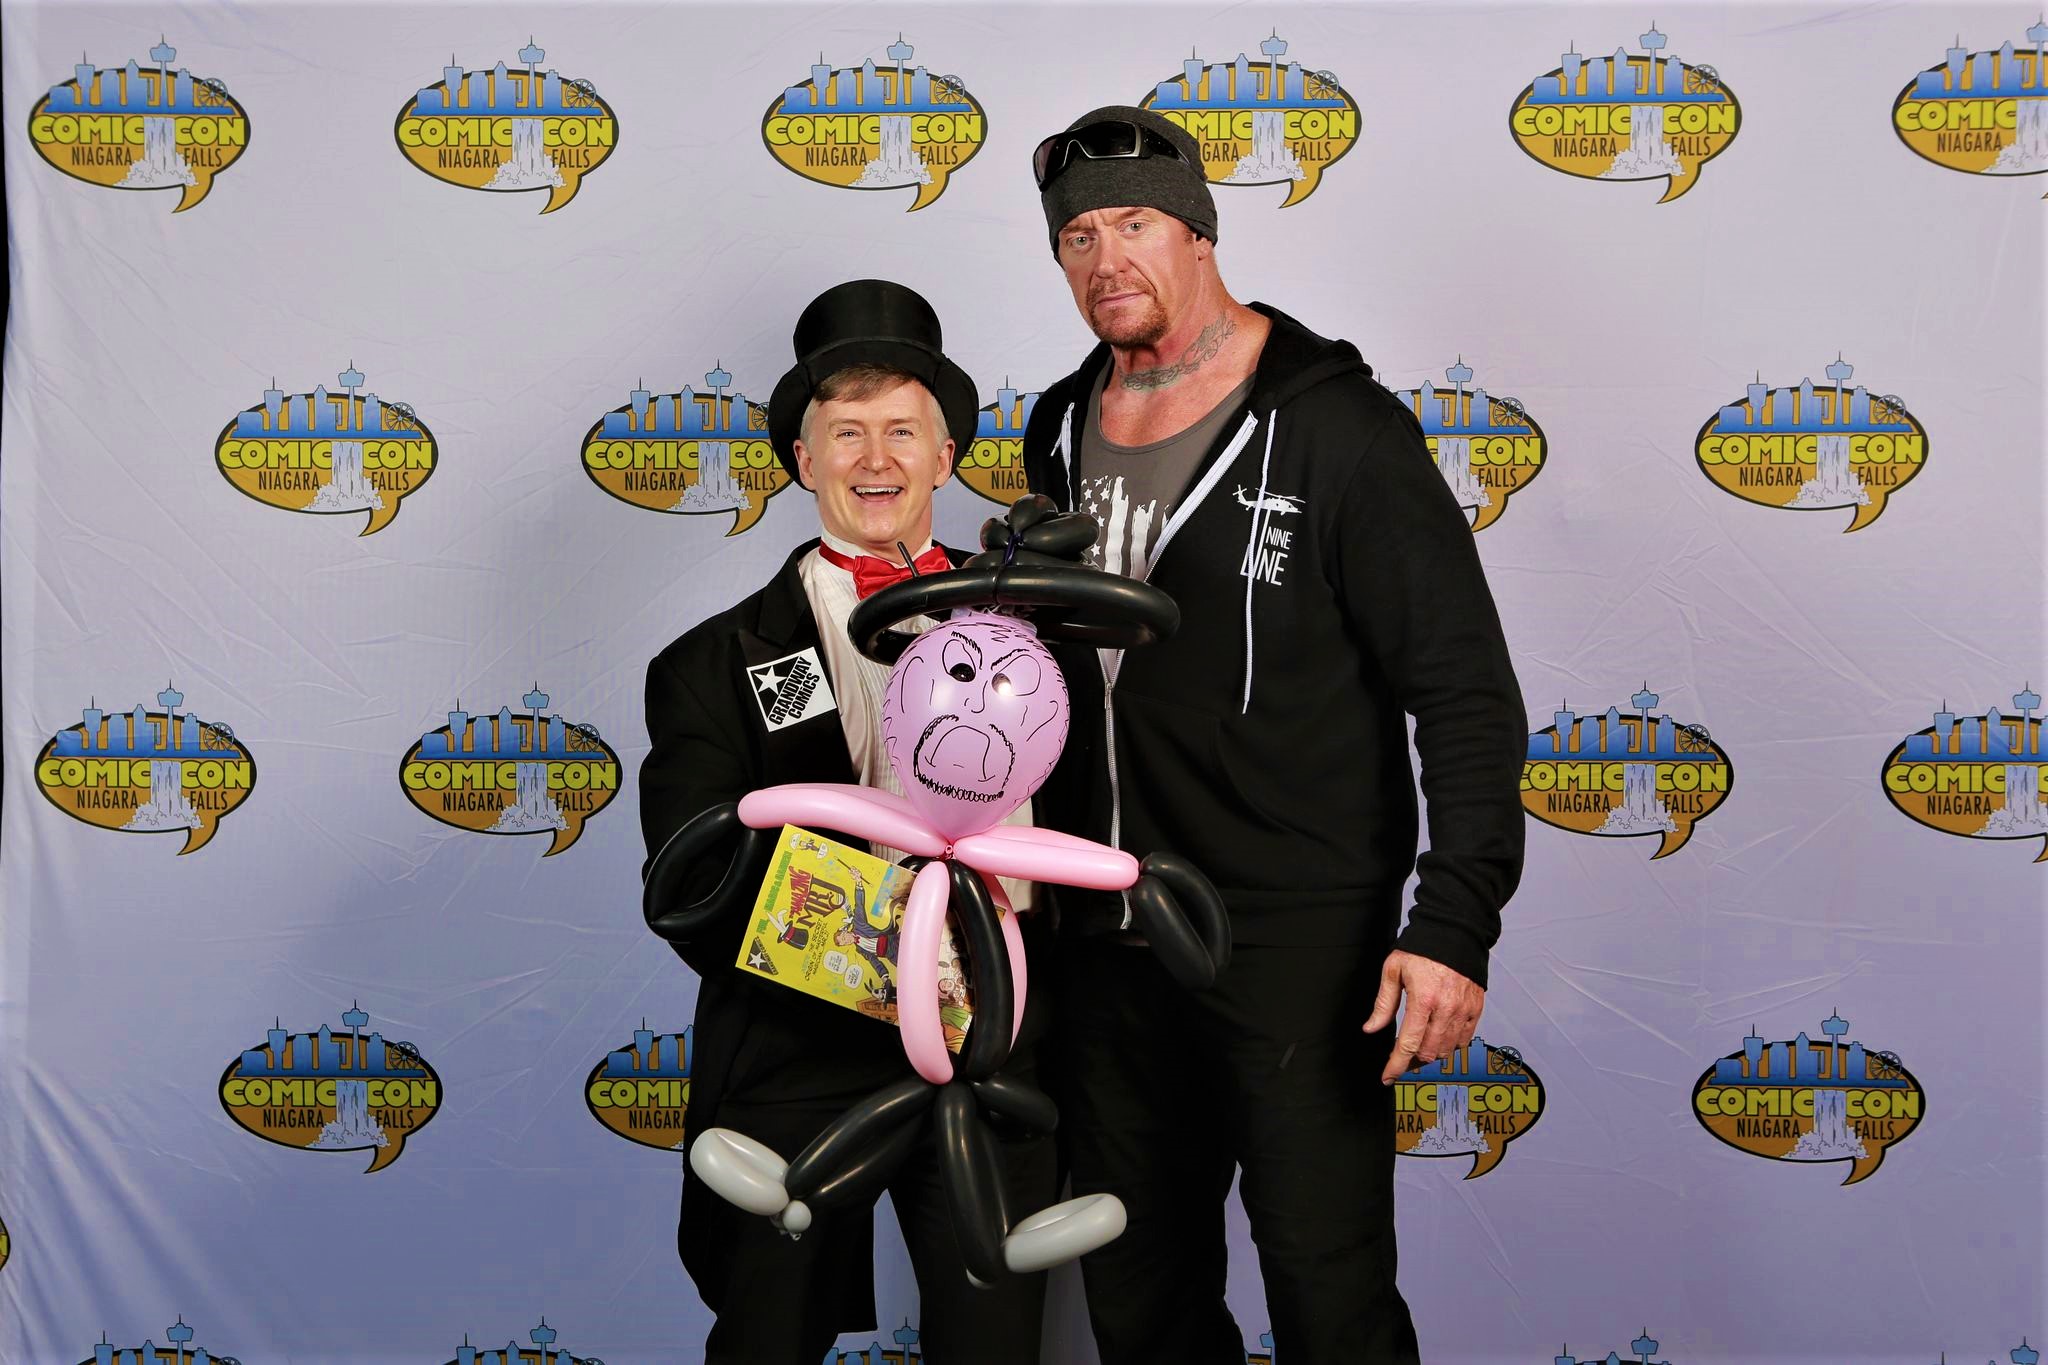 Undertaker (Liked his balloon!)